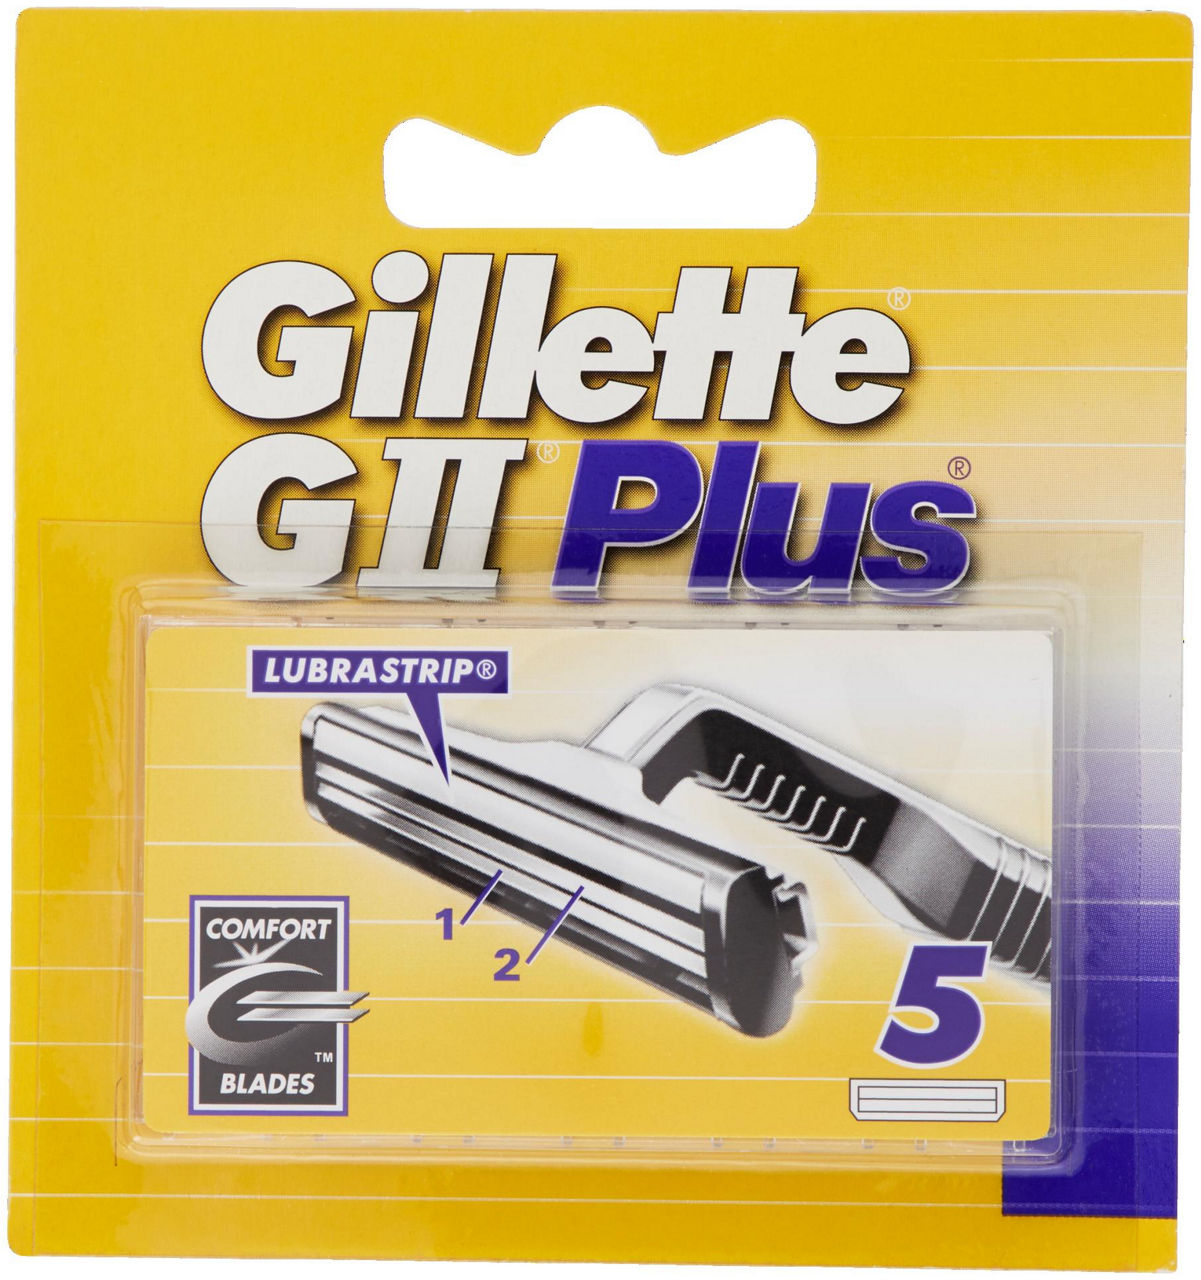 BILAME GII PLUS X 5 PZ - GILLETTE - 0